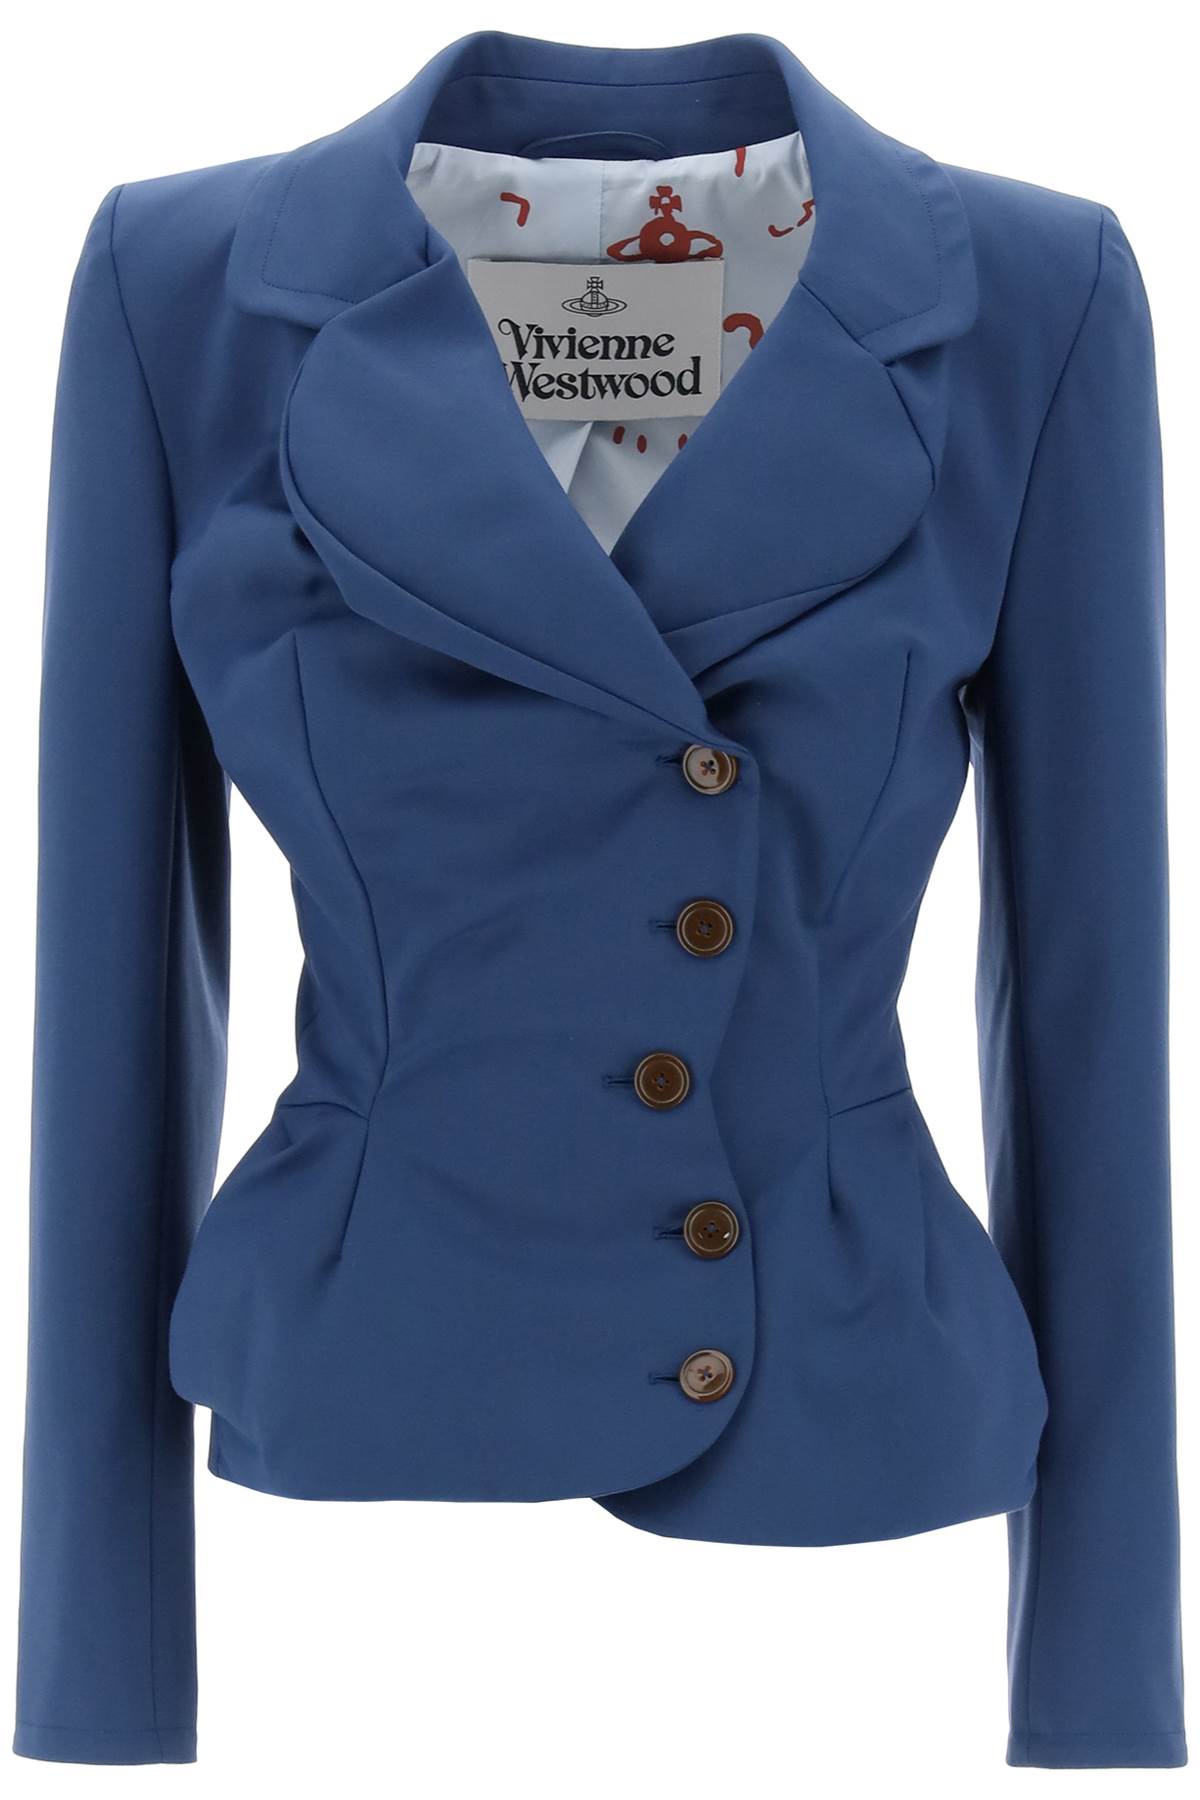 Vivienne westwood drunken tailored draped jacket-0